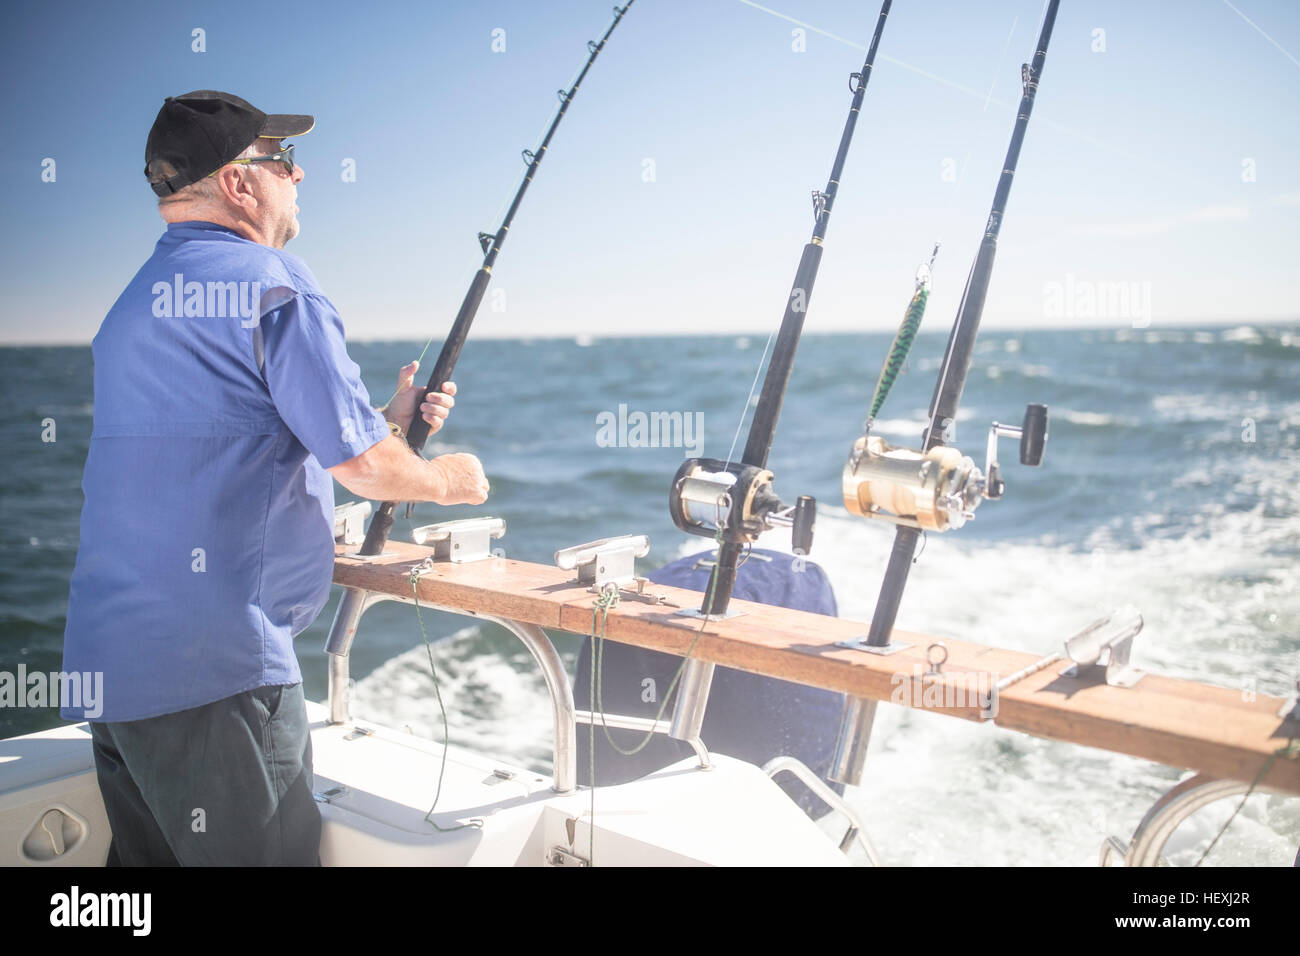 Man on boat deep sea fishing Stock Photo